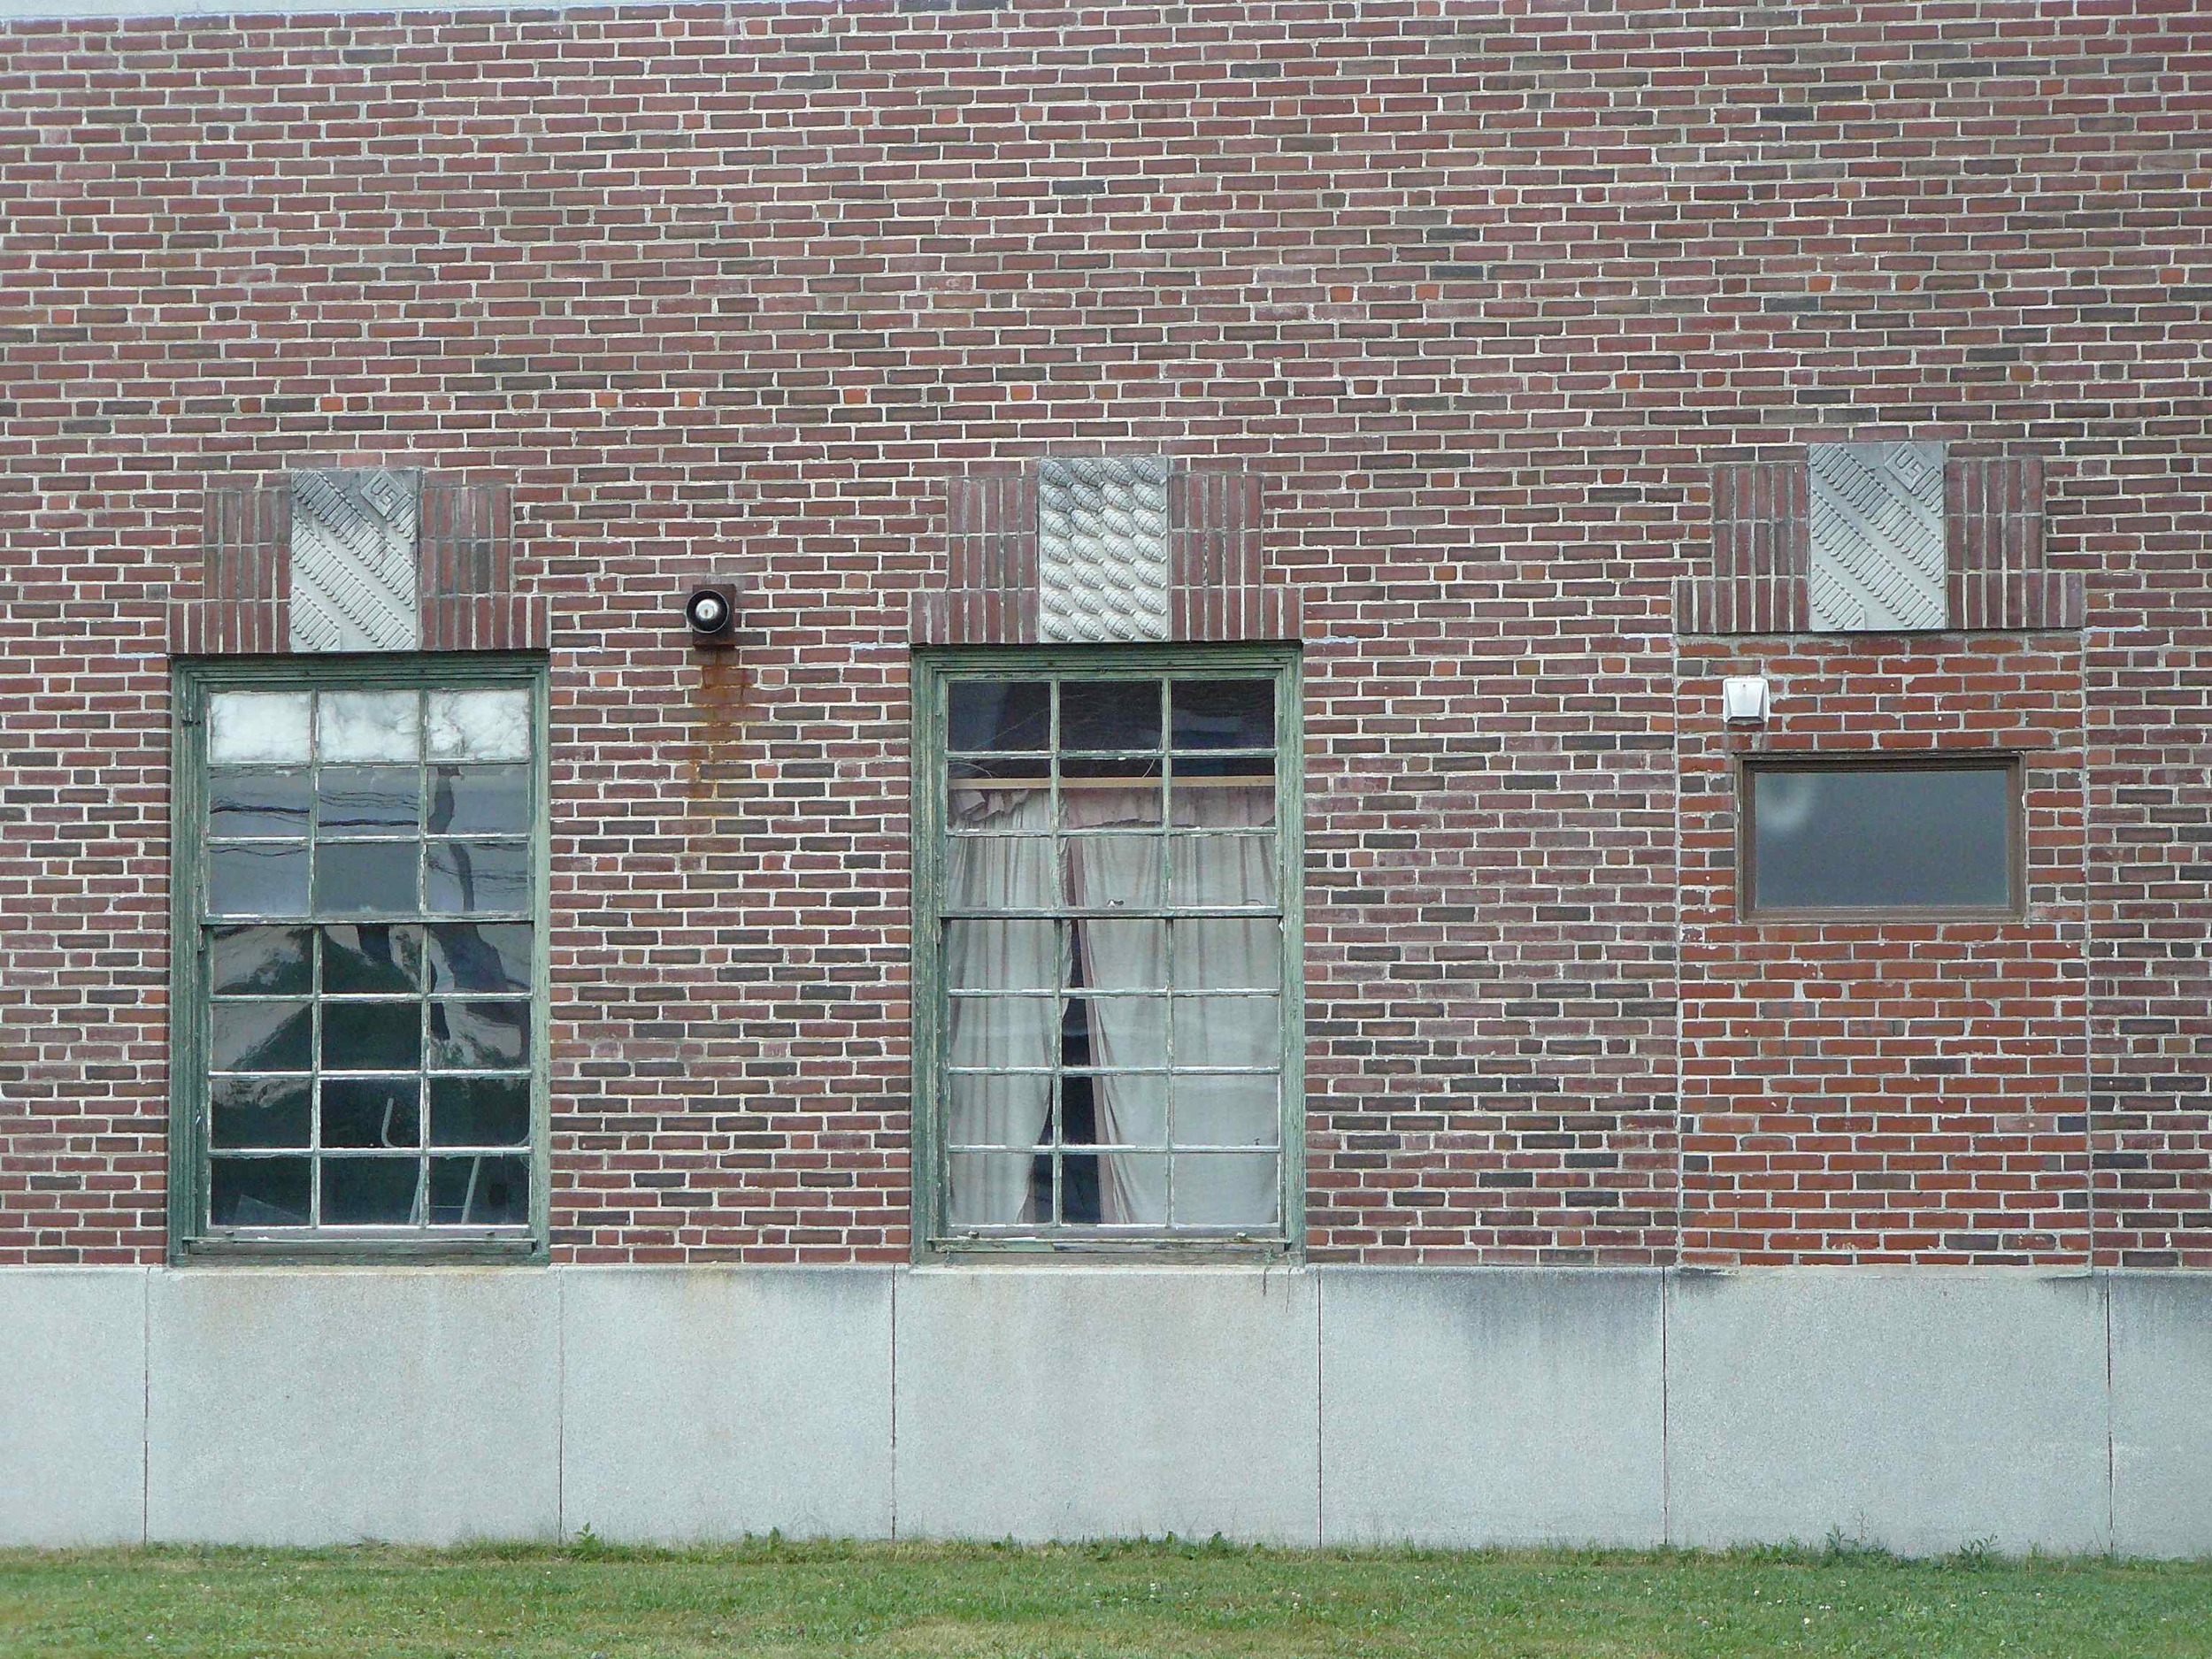 South_Portland_Armory_side_windows.jpg